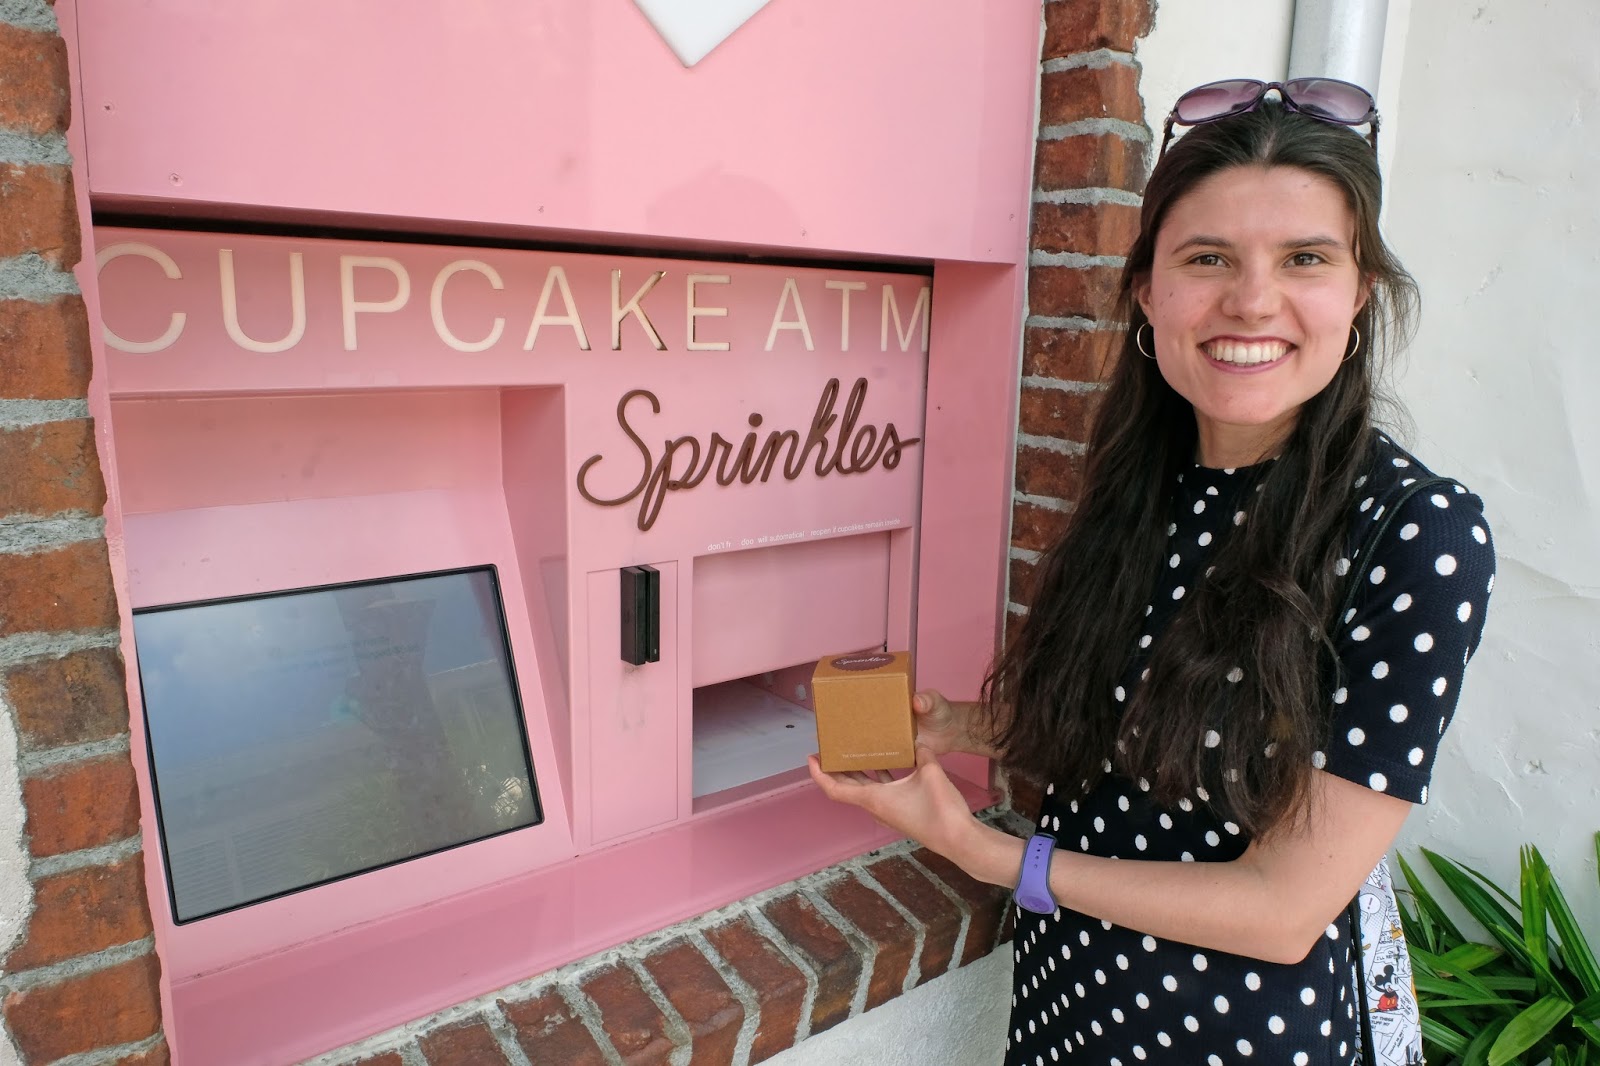 Sprinkles Cupcake ATM at Walt Disney World